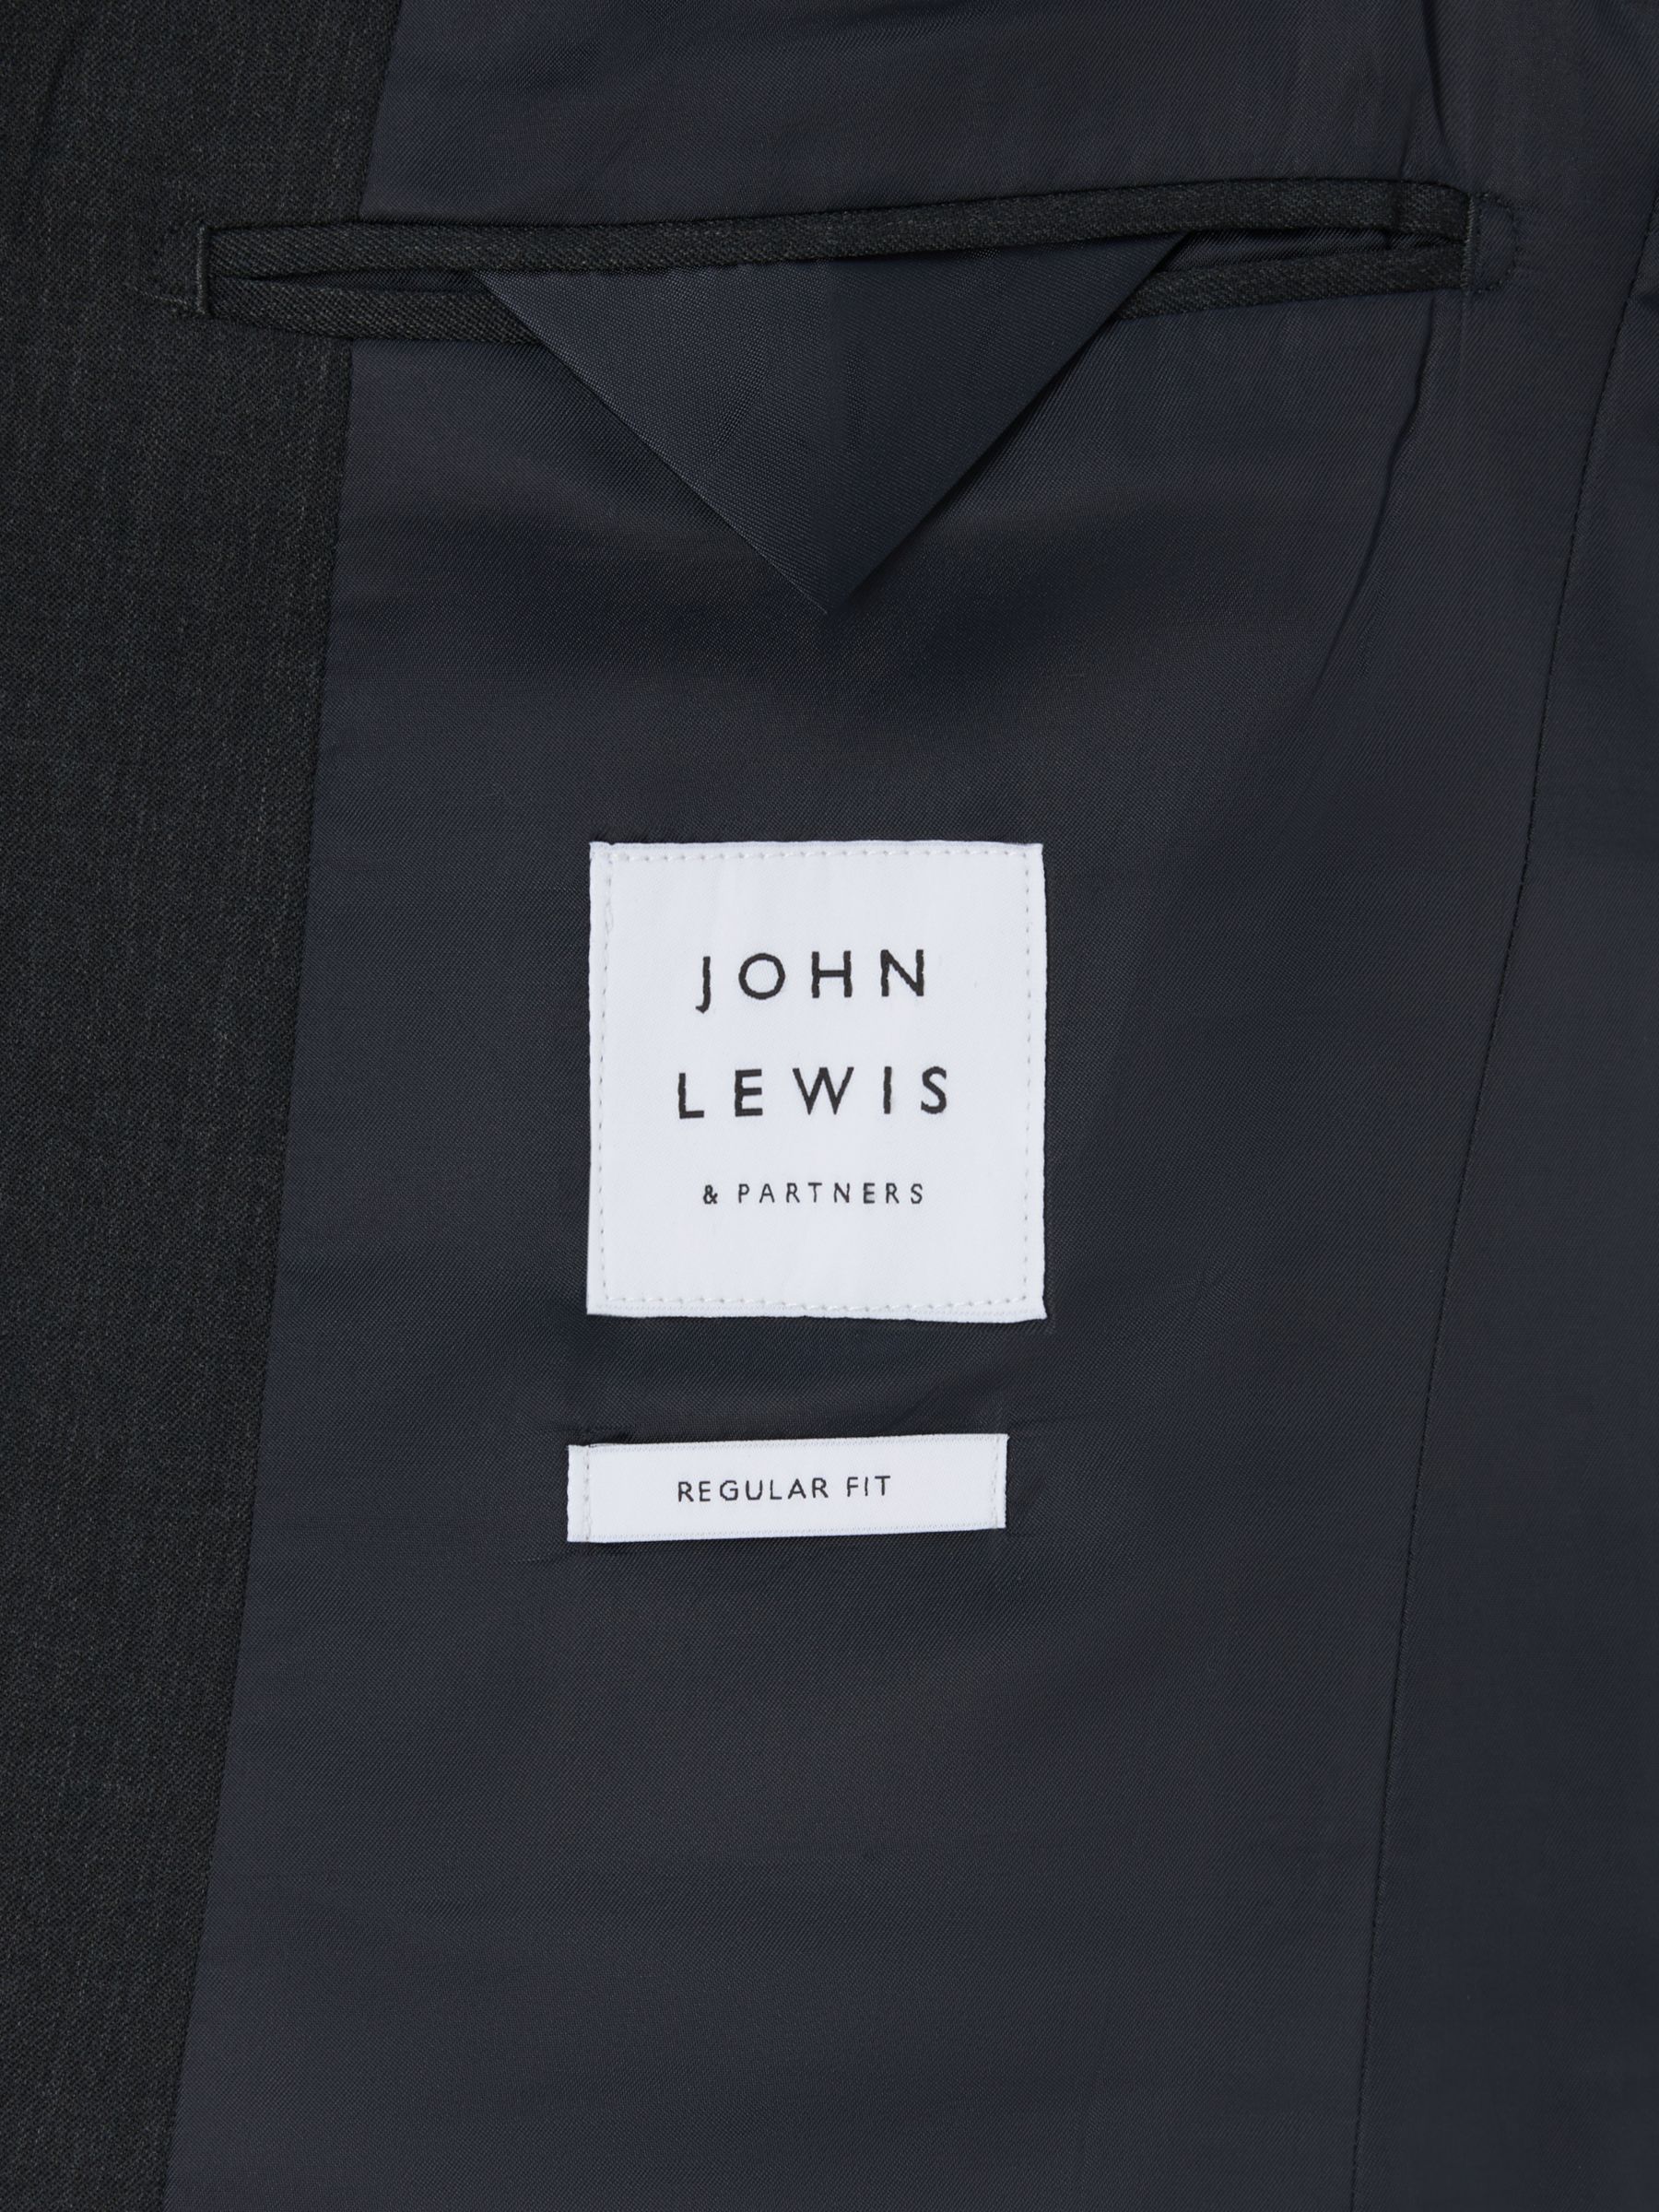 John Lewis Washable Wool Blend Regular Fit Suit Jacket, Charcoal, 36R